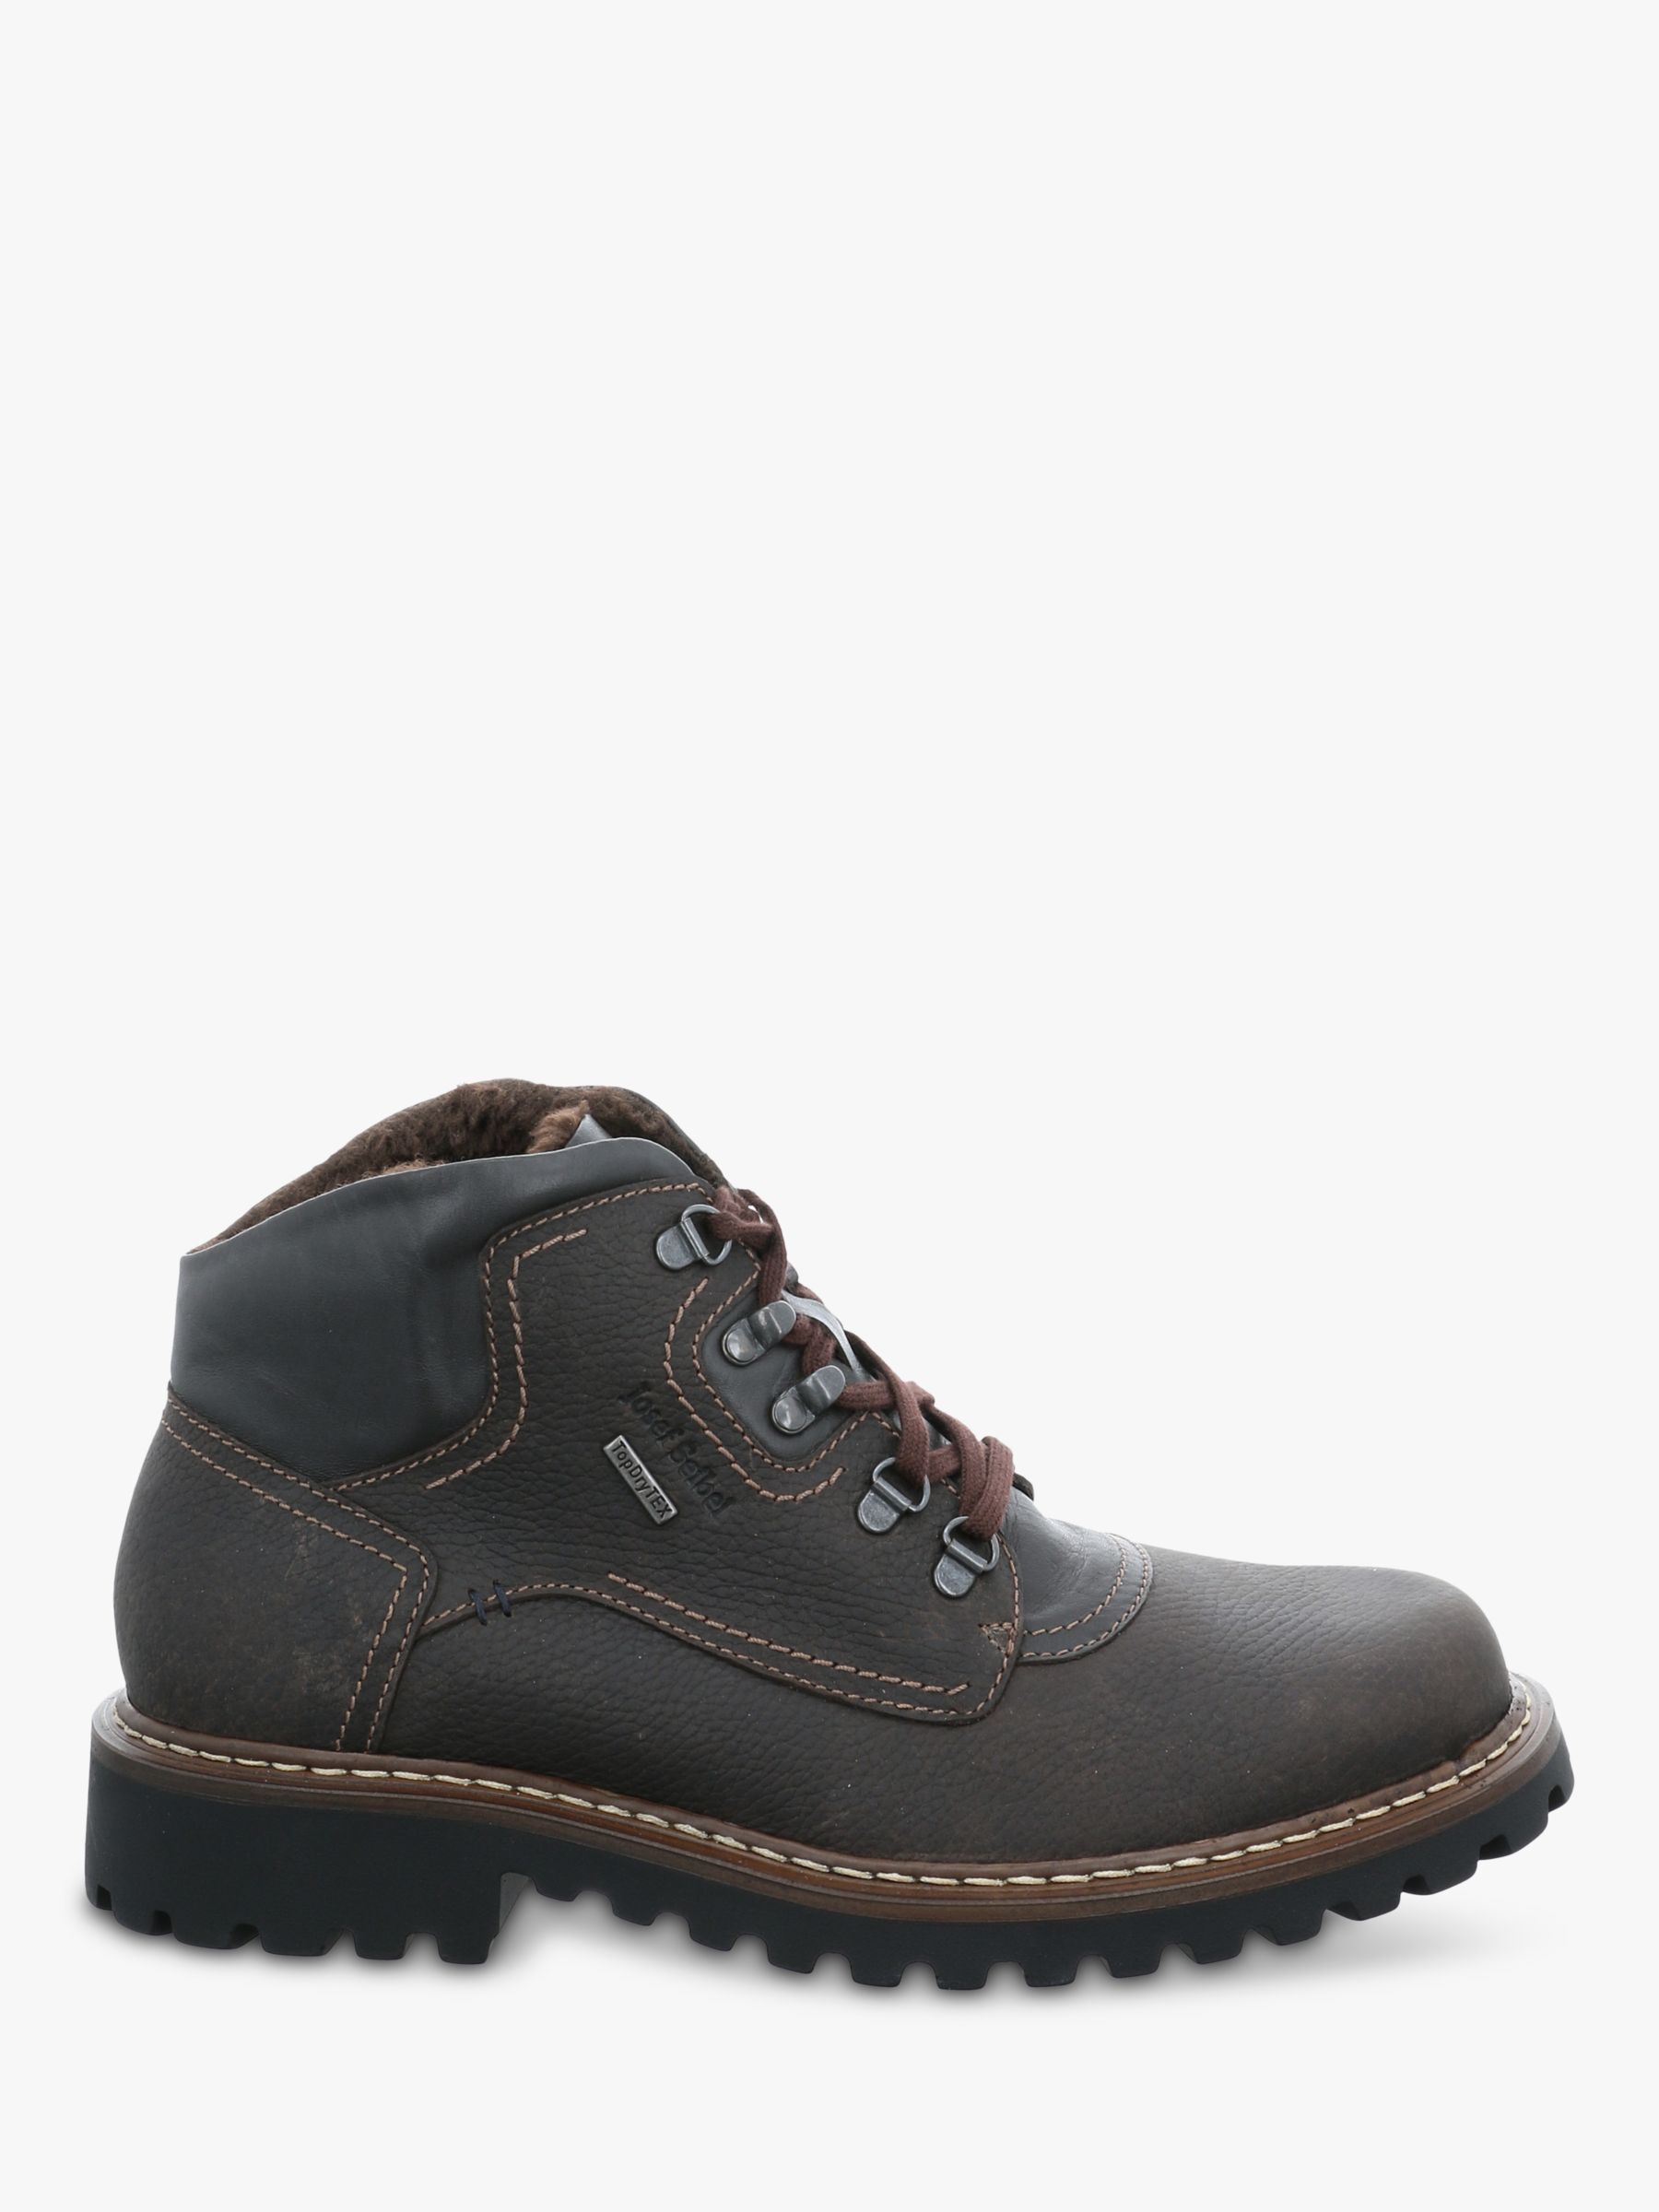 Josef Seibel Chance 71 Waterproof Leather Boots, Brown